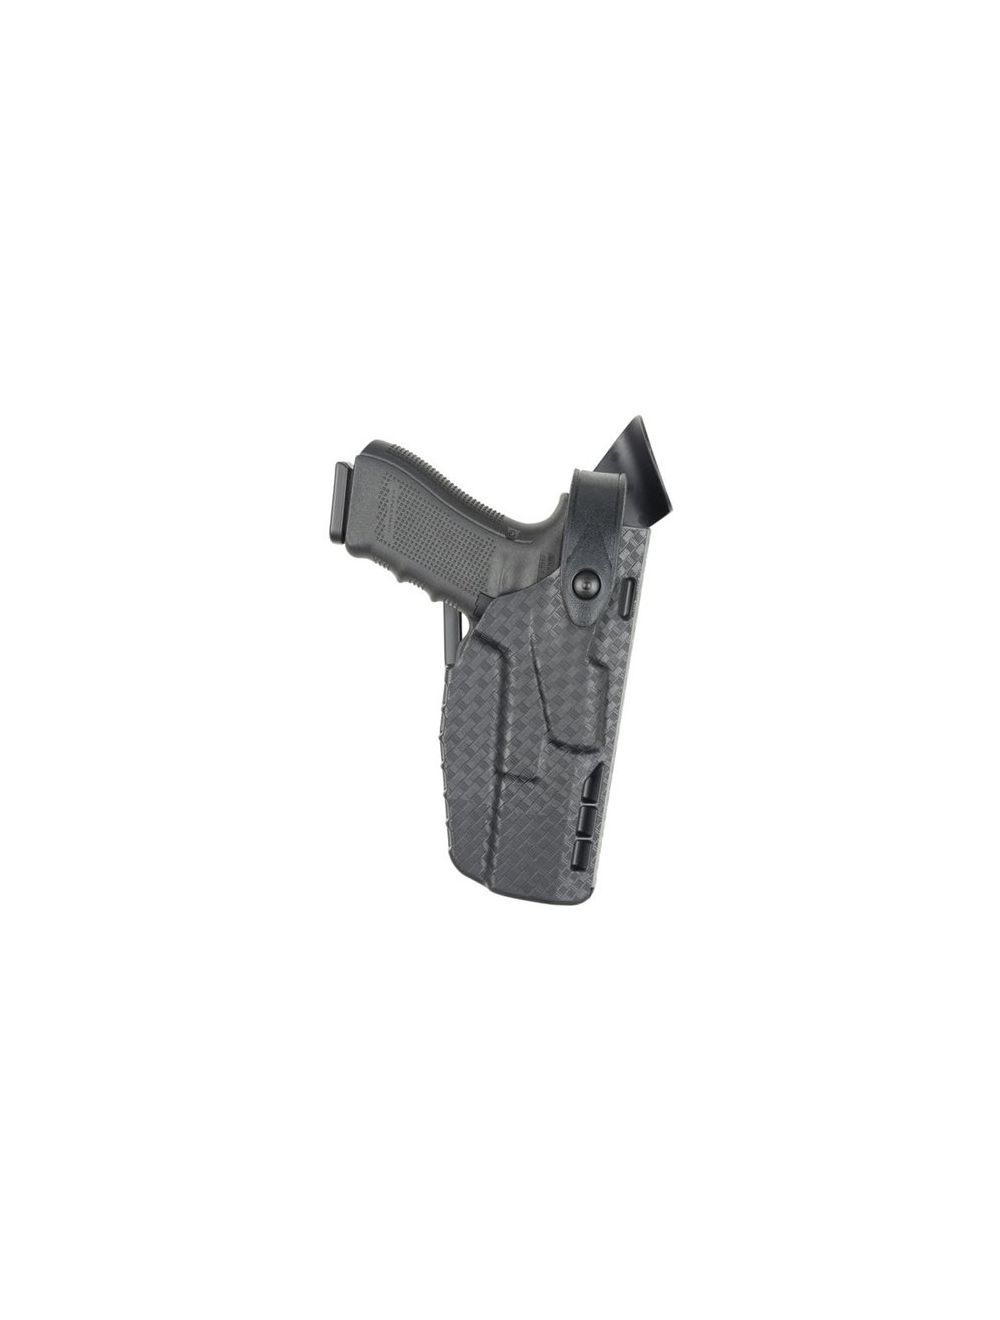 Model 7360 7TS ALS/SLS Mid-Ride Duty Holster for Glock 19 w/ Compact Light